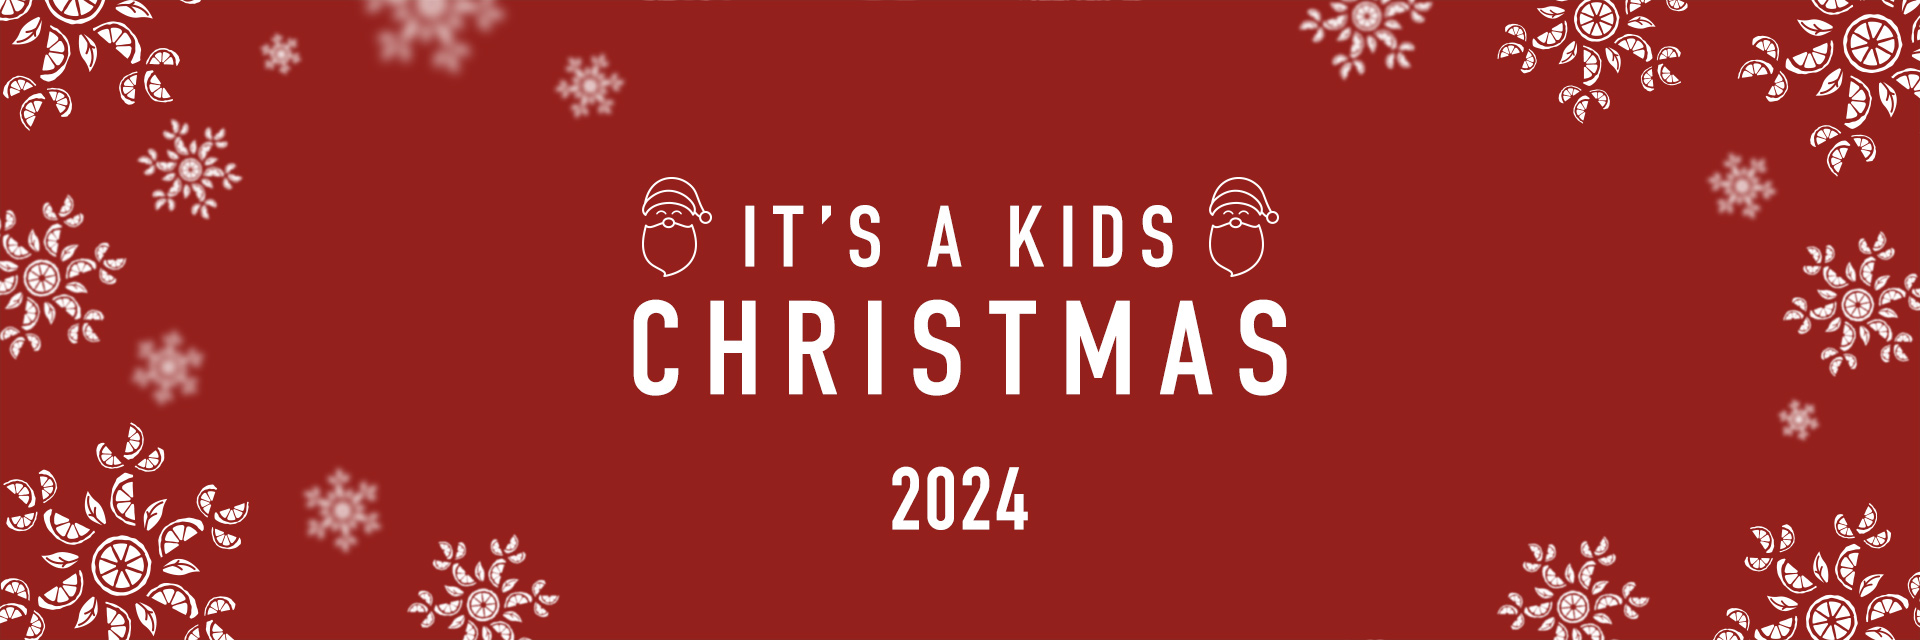 Kids Christmas Menu 2024 at Harvester Aintree Park